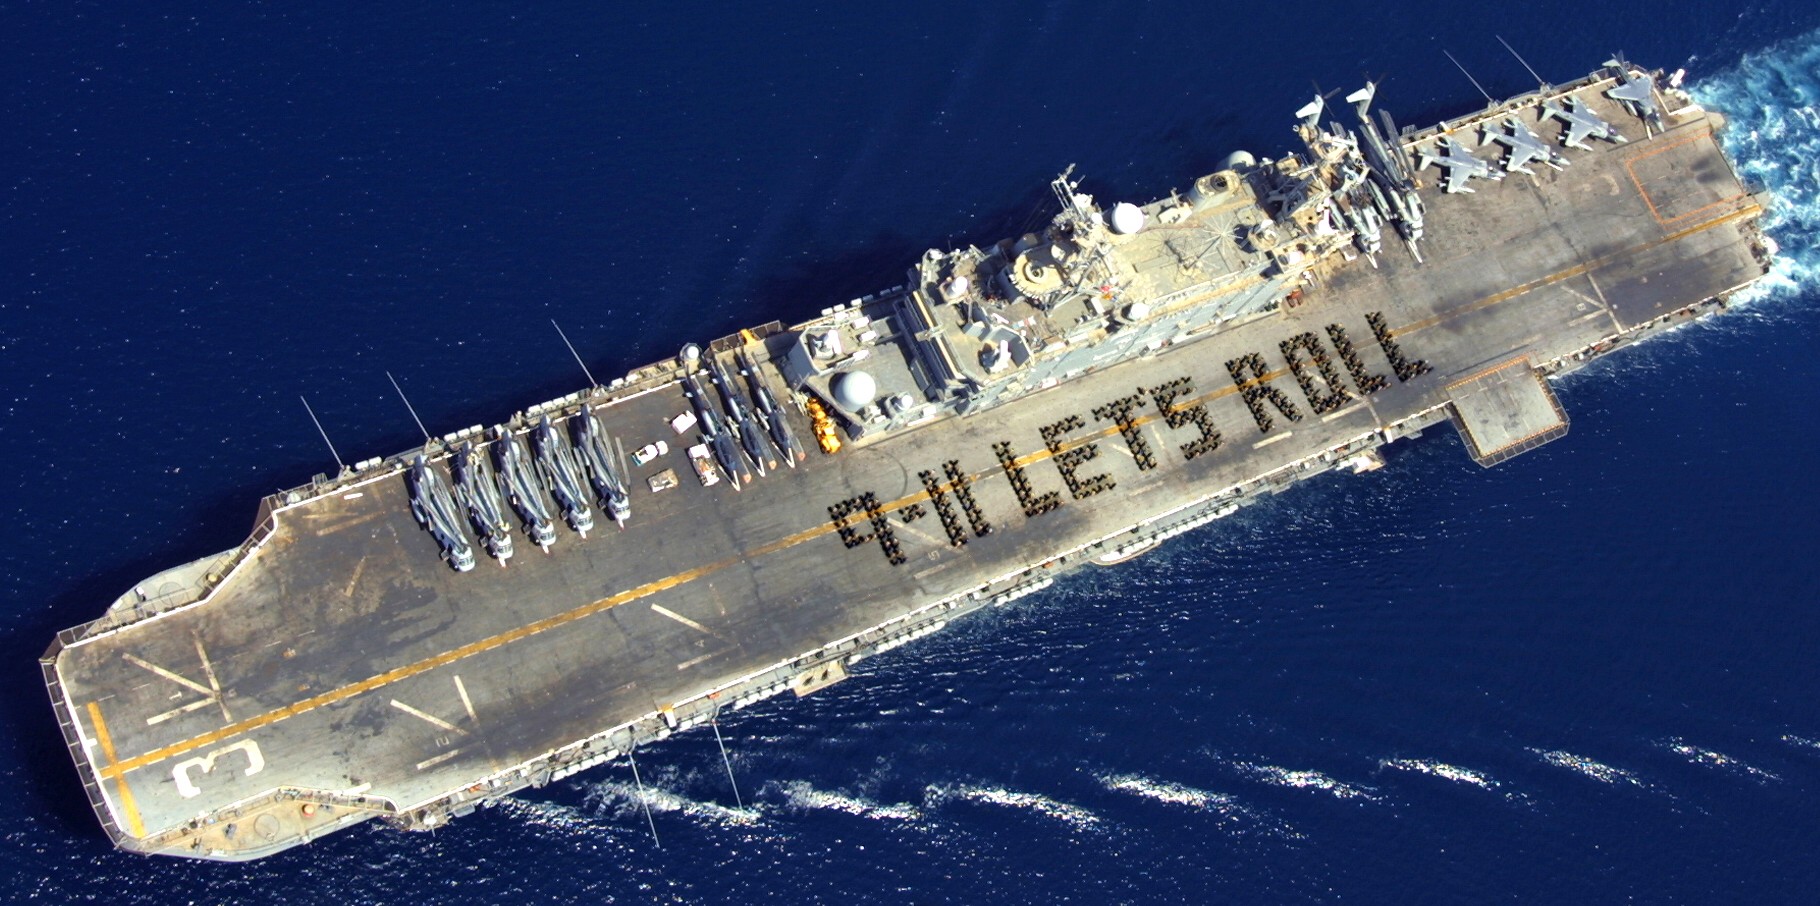 lha-3 uss belleau wood tarawa class amphibious assault ship us navy 04 operation enduring freedom